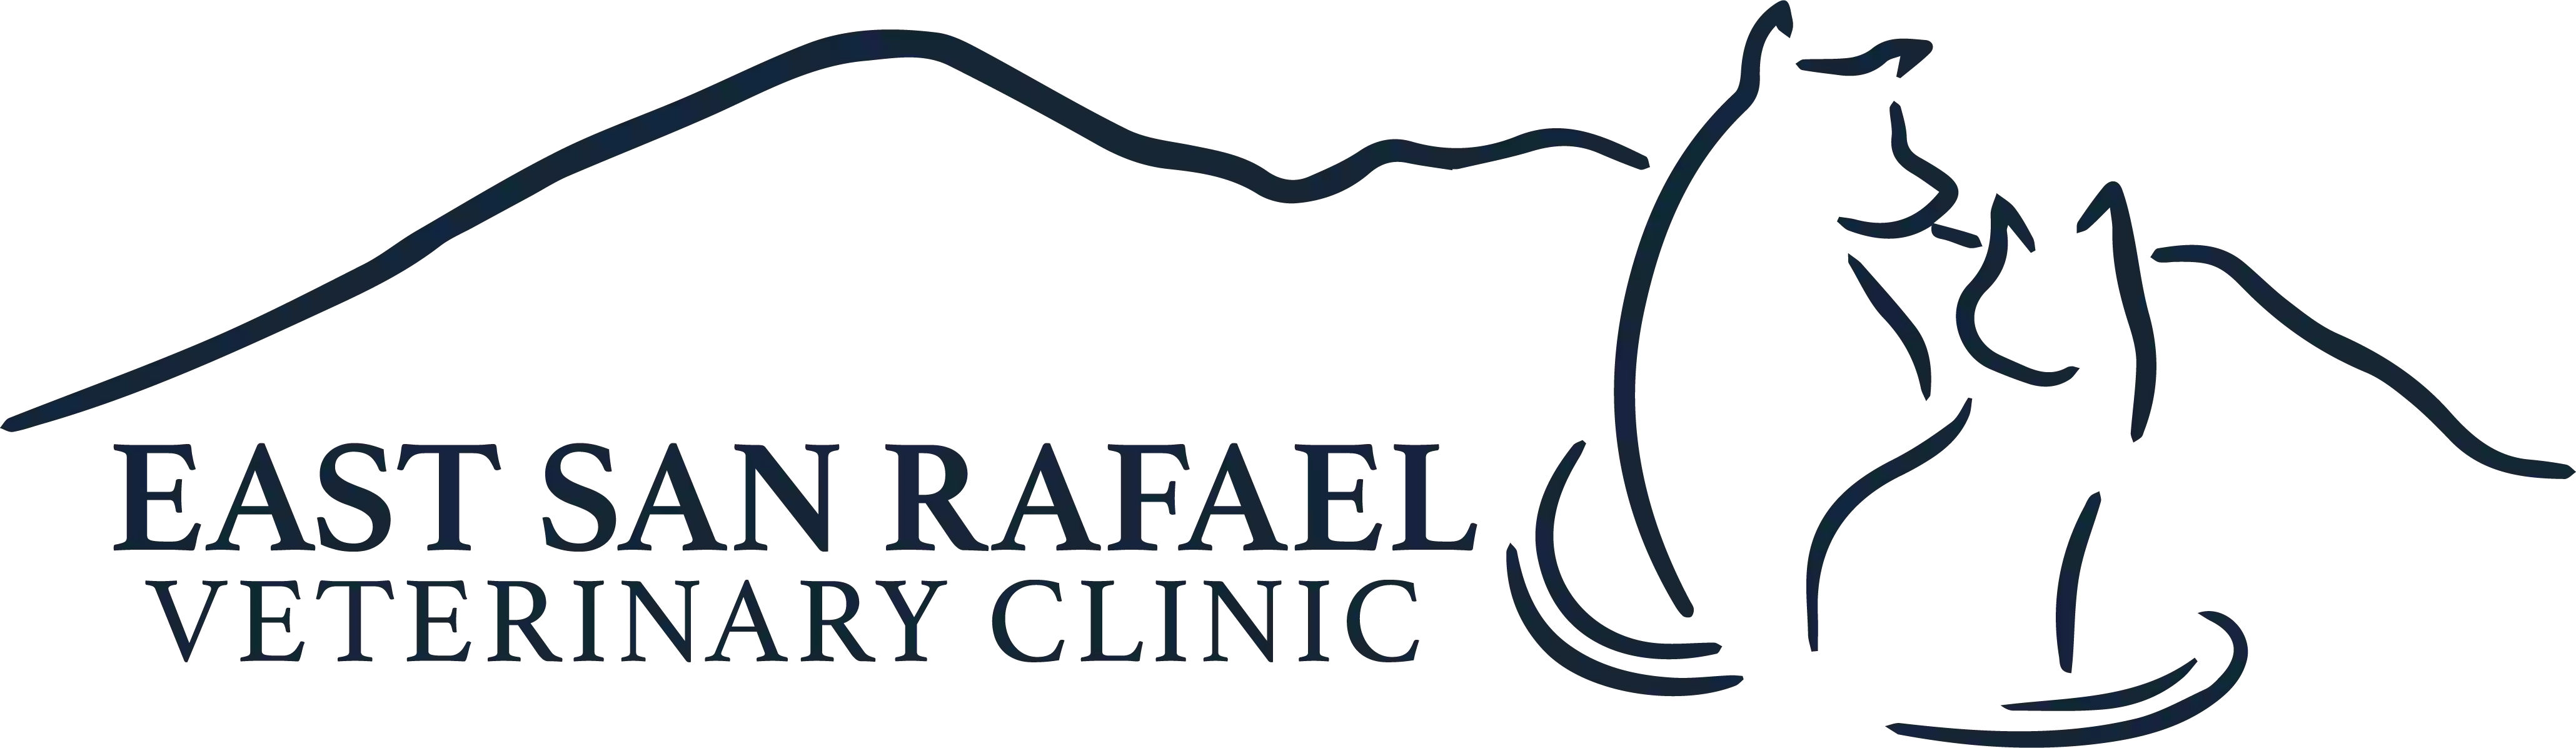 East San Rafael Veterinary Clinic